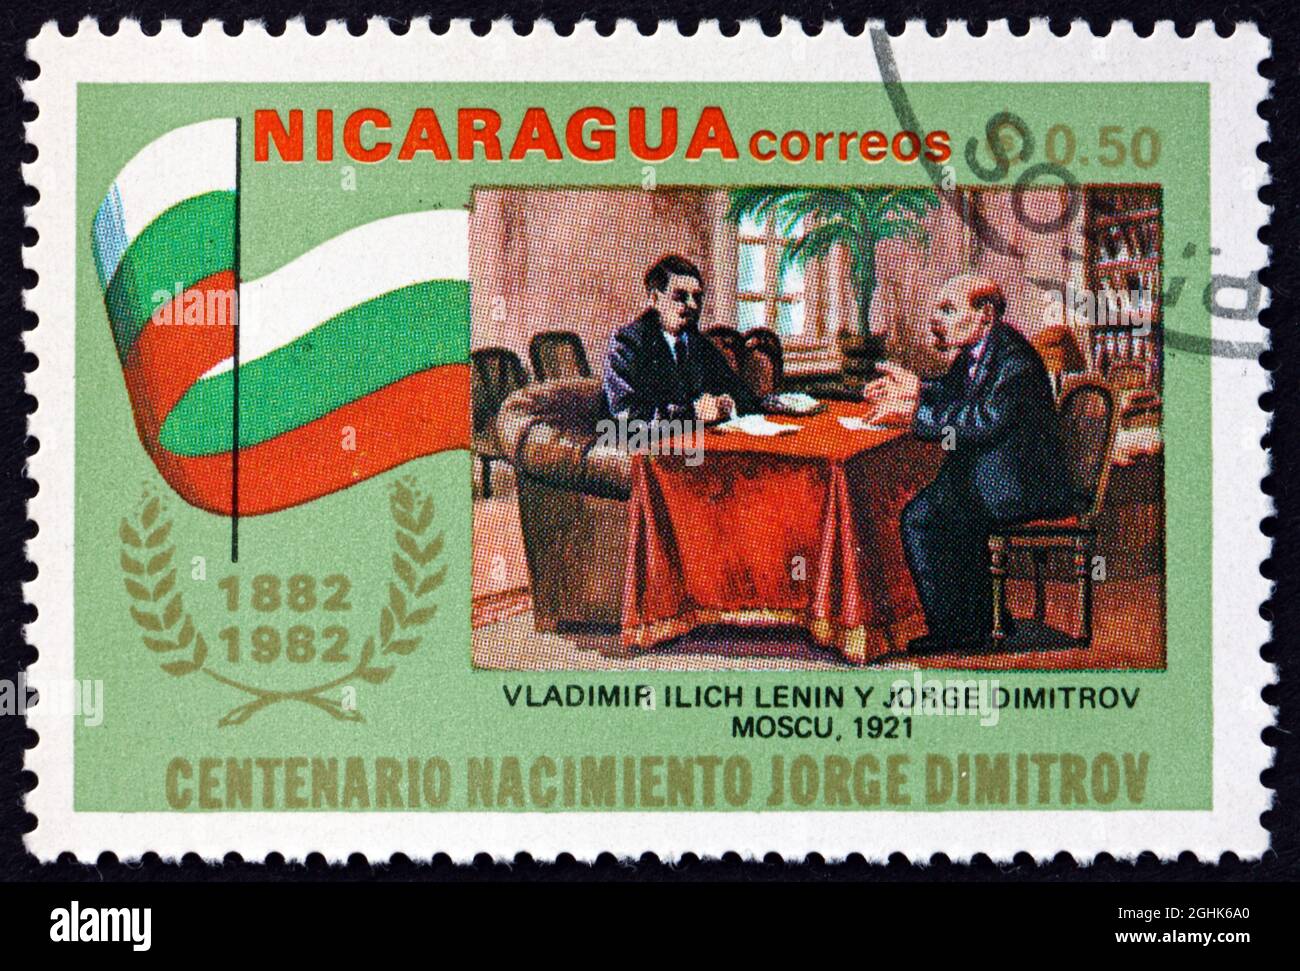 NICARAGUA - CIRCA 1982: a stamp printed in Nicaragua shows Lenin and Dimitrov, 1921, circa 1982 Stock Photo